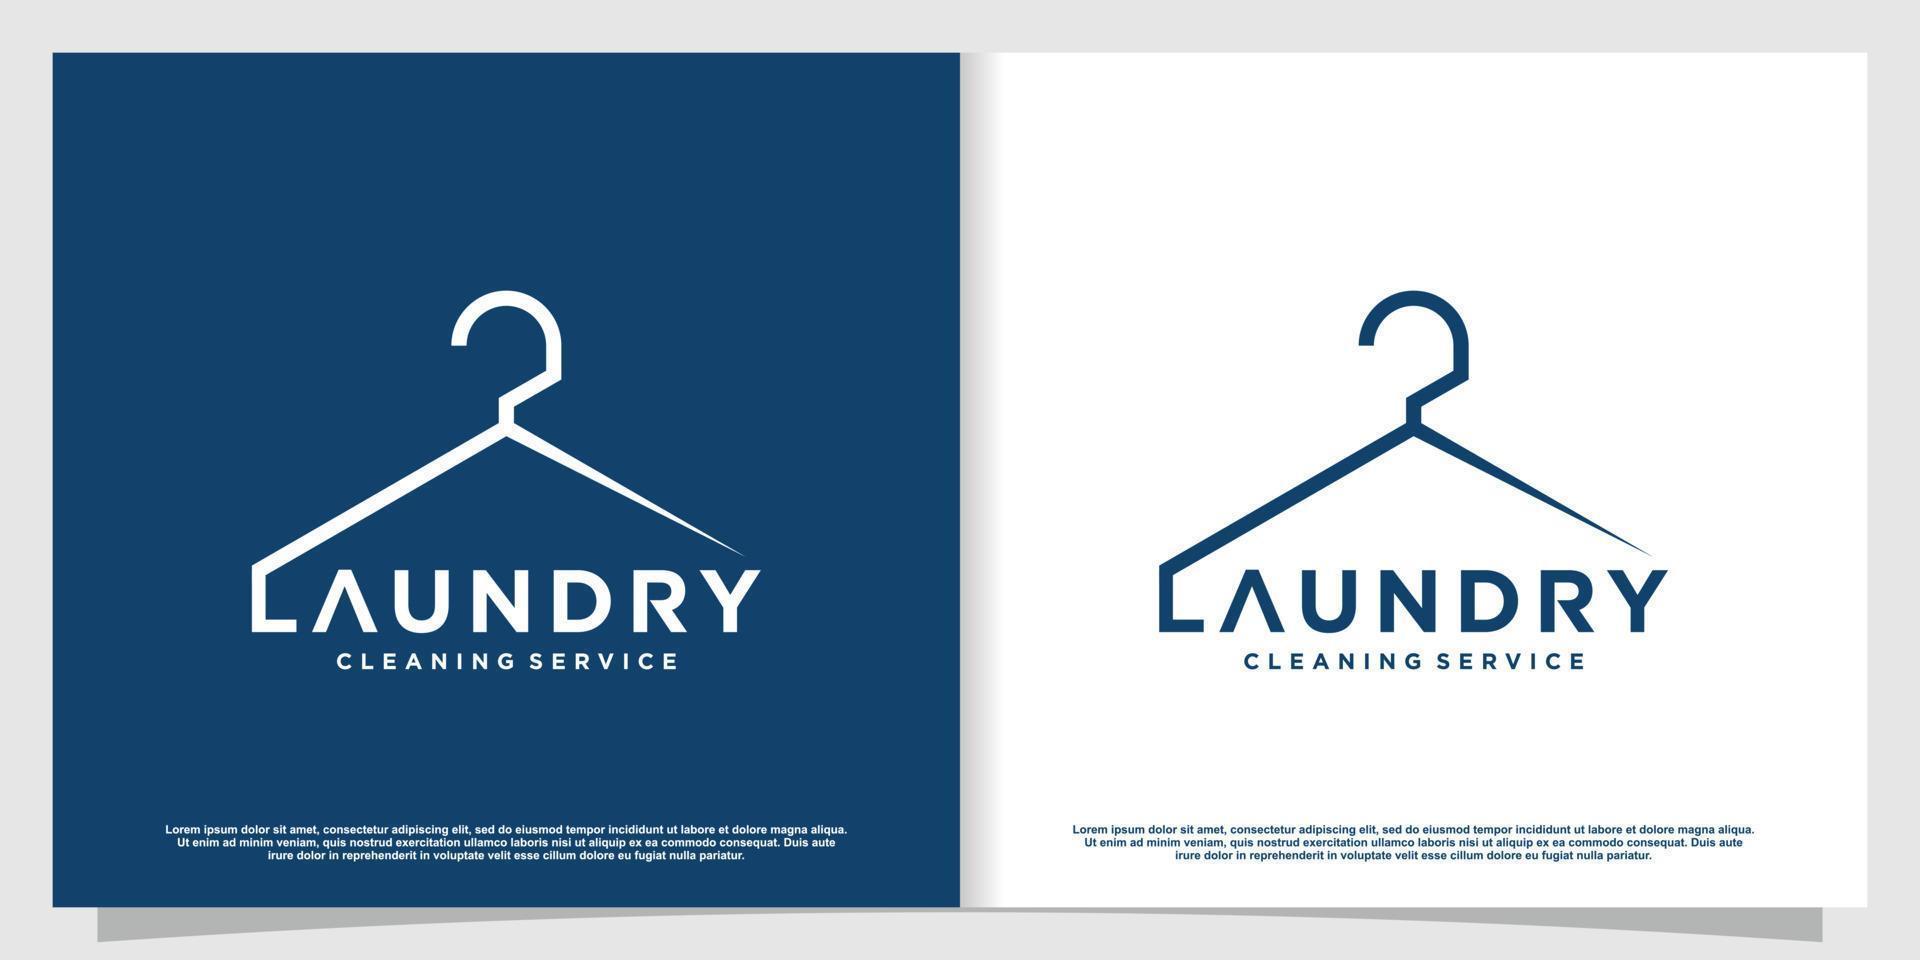 Laundry logo with creative element style Premium Vector part 6